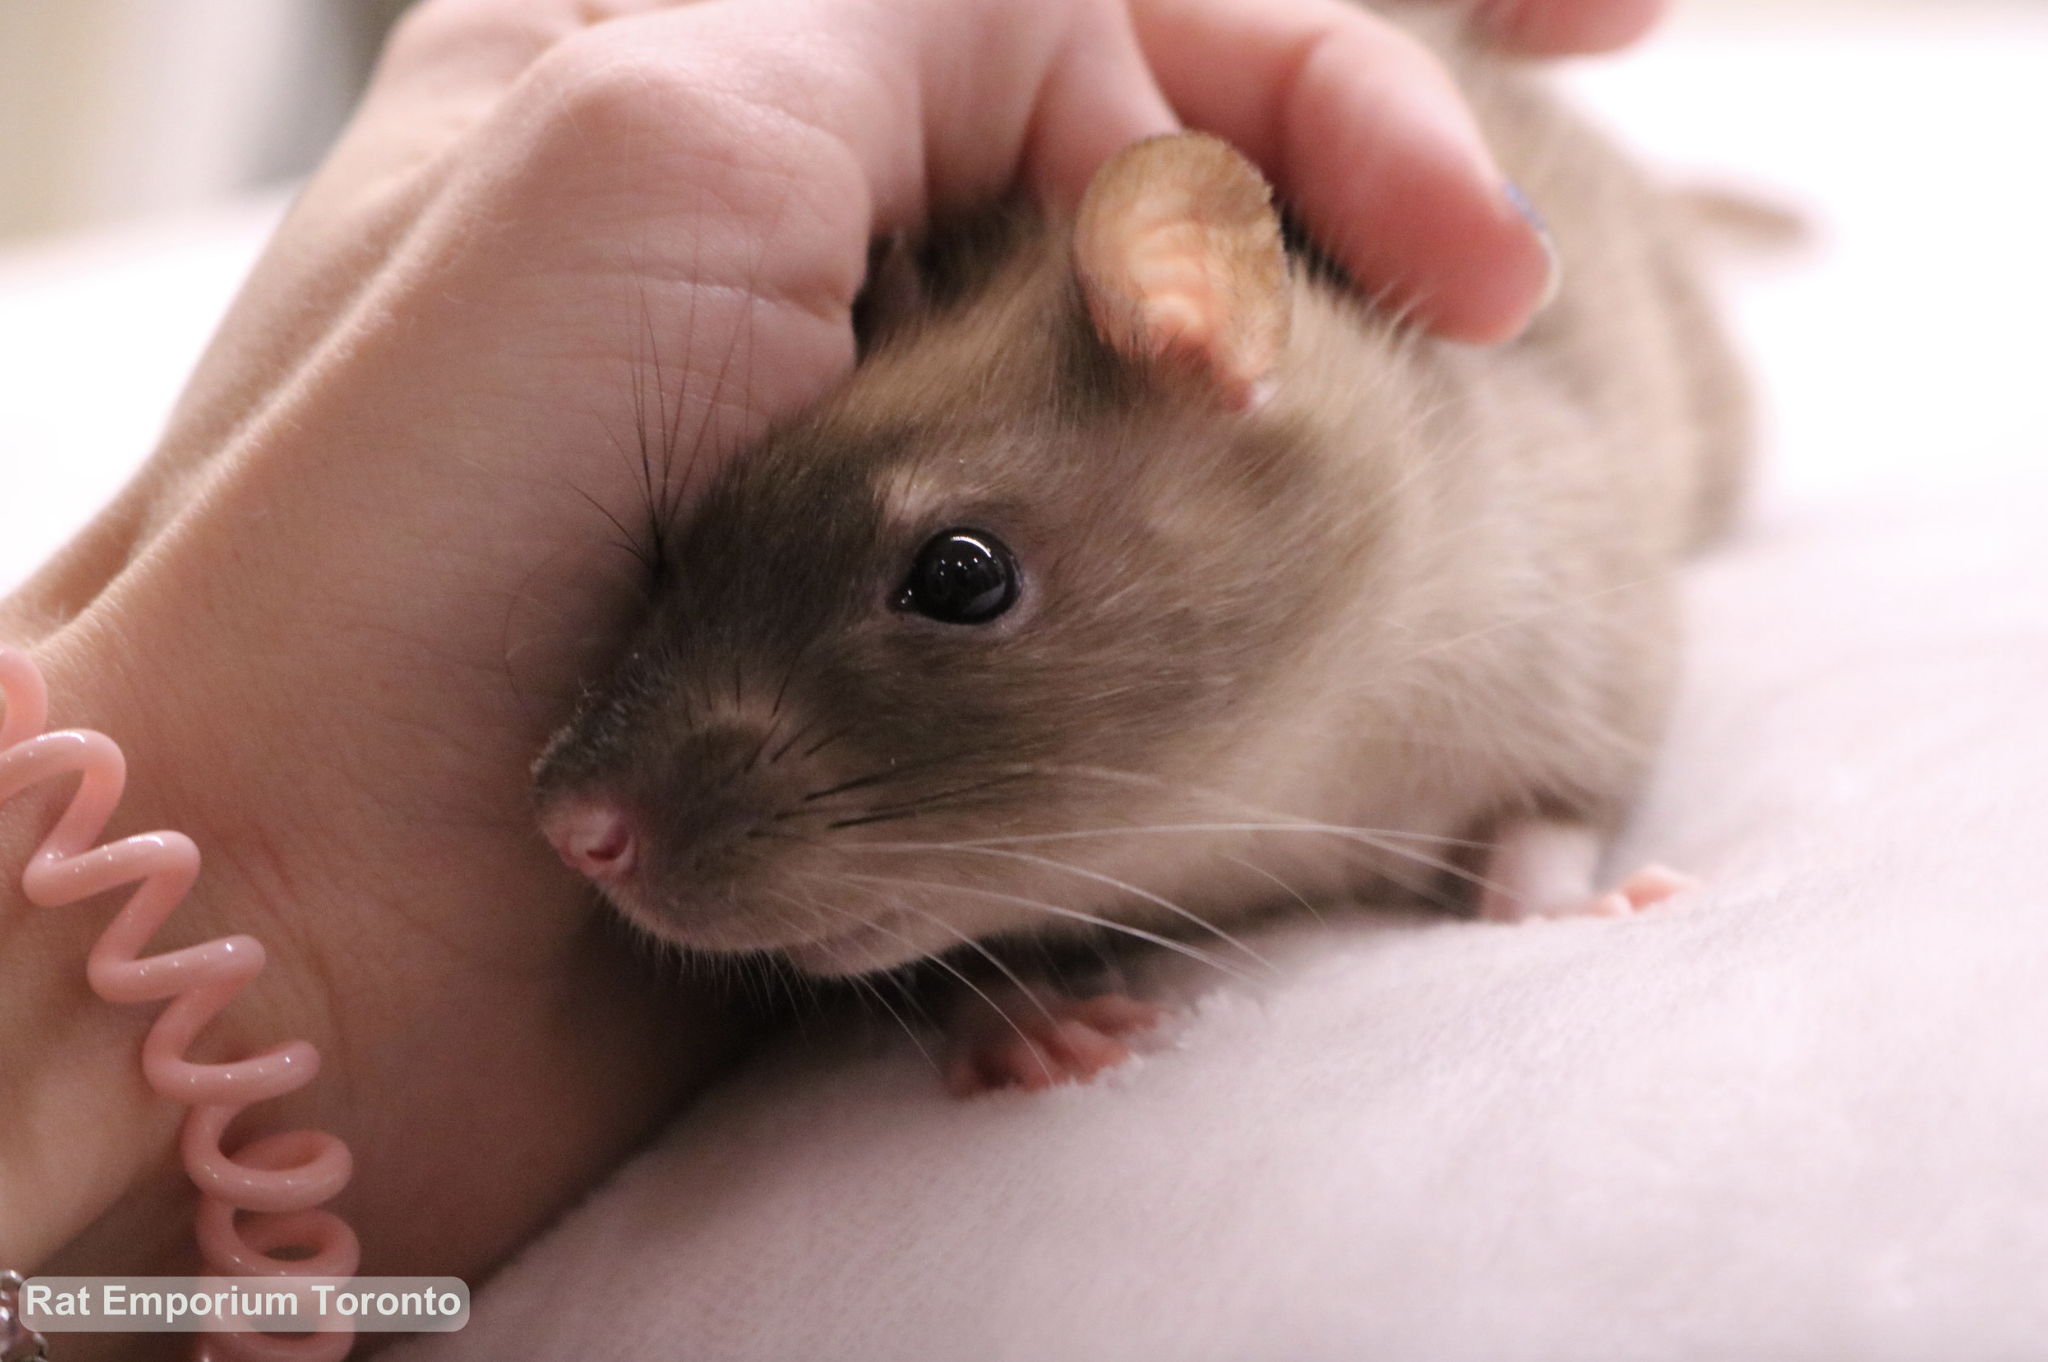 black eyed sable rat - born and raised at the Rat Emporium Toronto - rat breeder Toronto - adopt pet rats - learn about rats